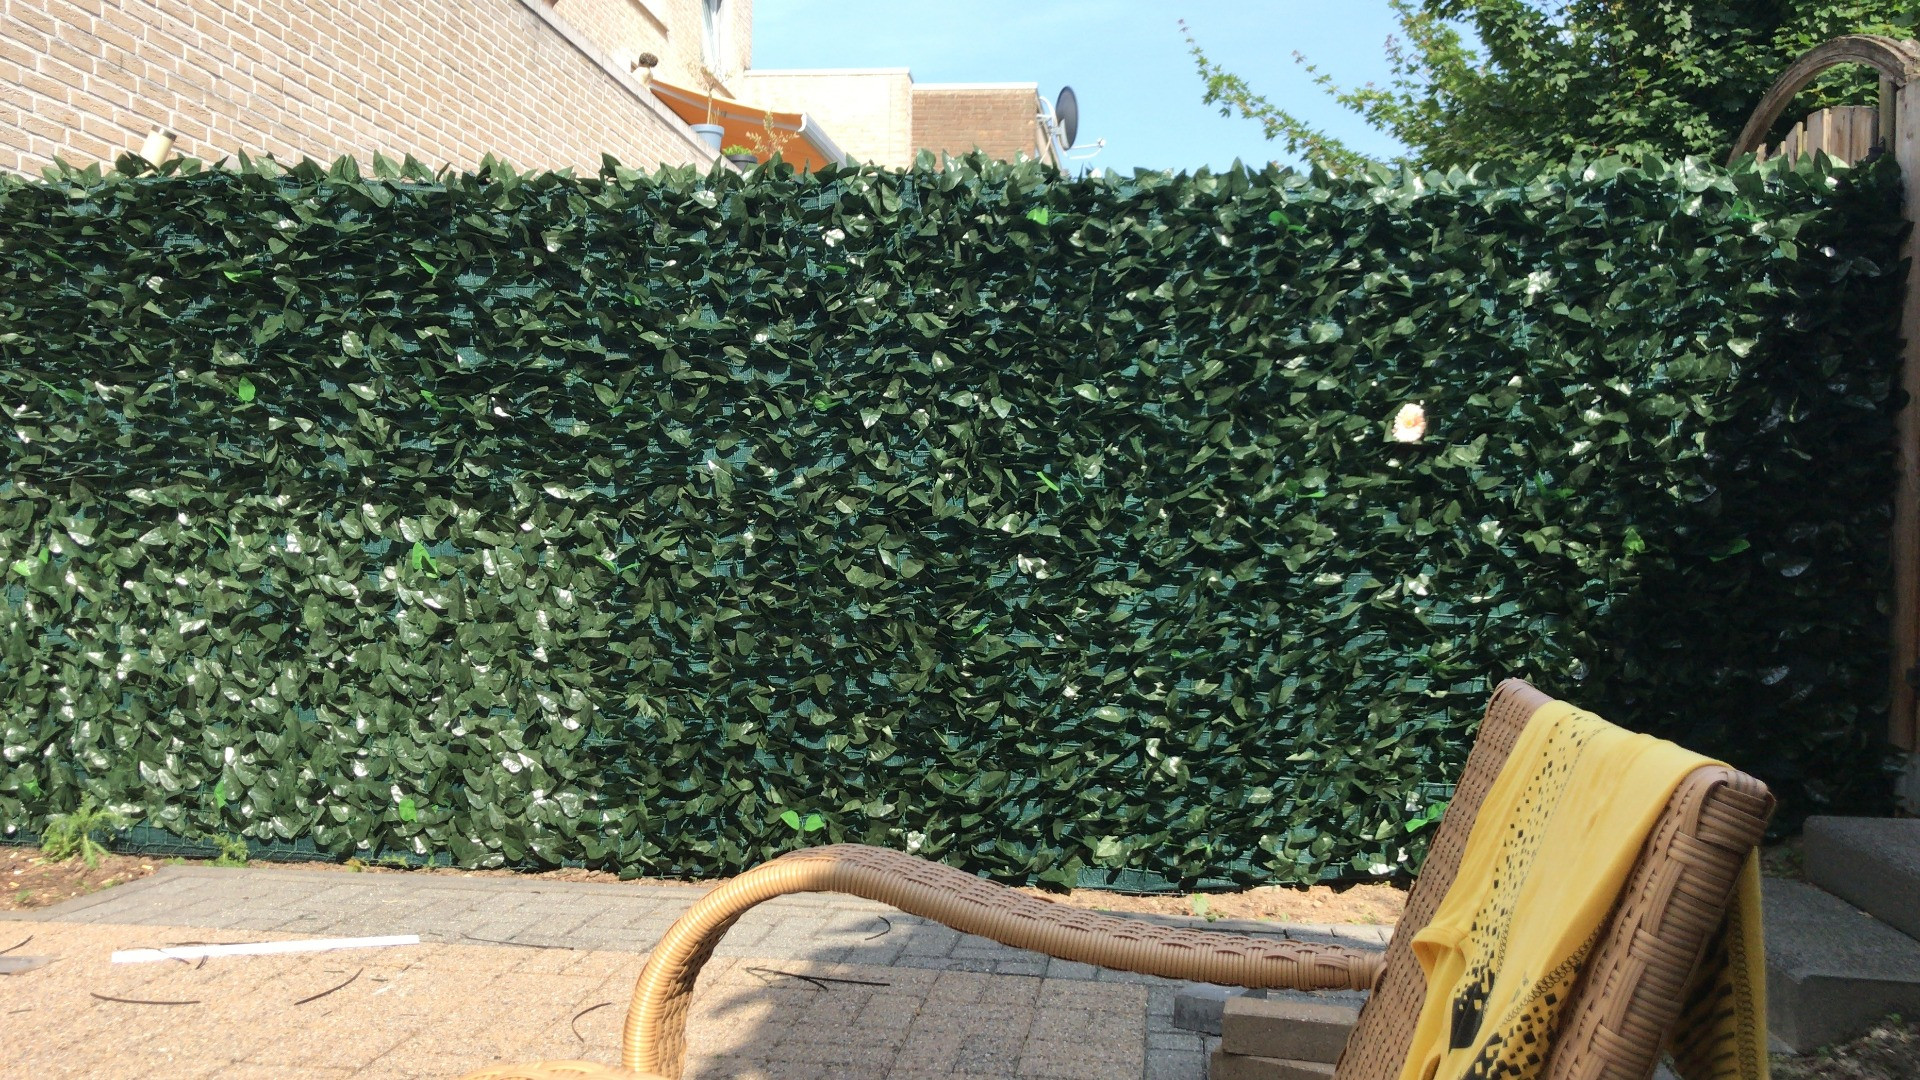 Kunsthaag balkonscherm tuinscherm hedera klimop 100x300cm